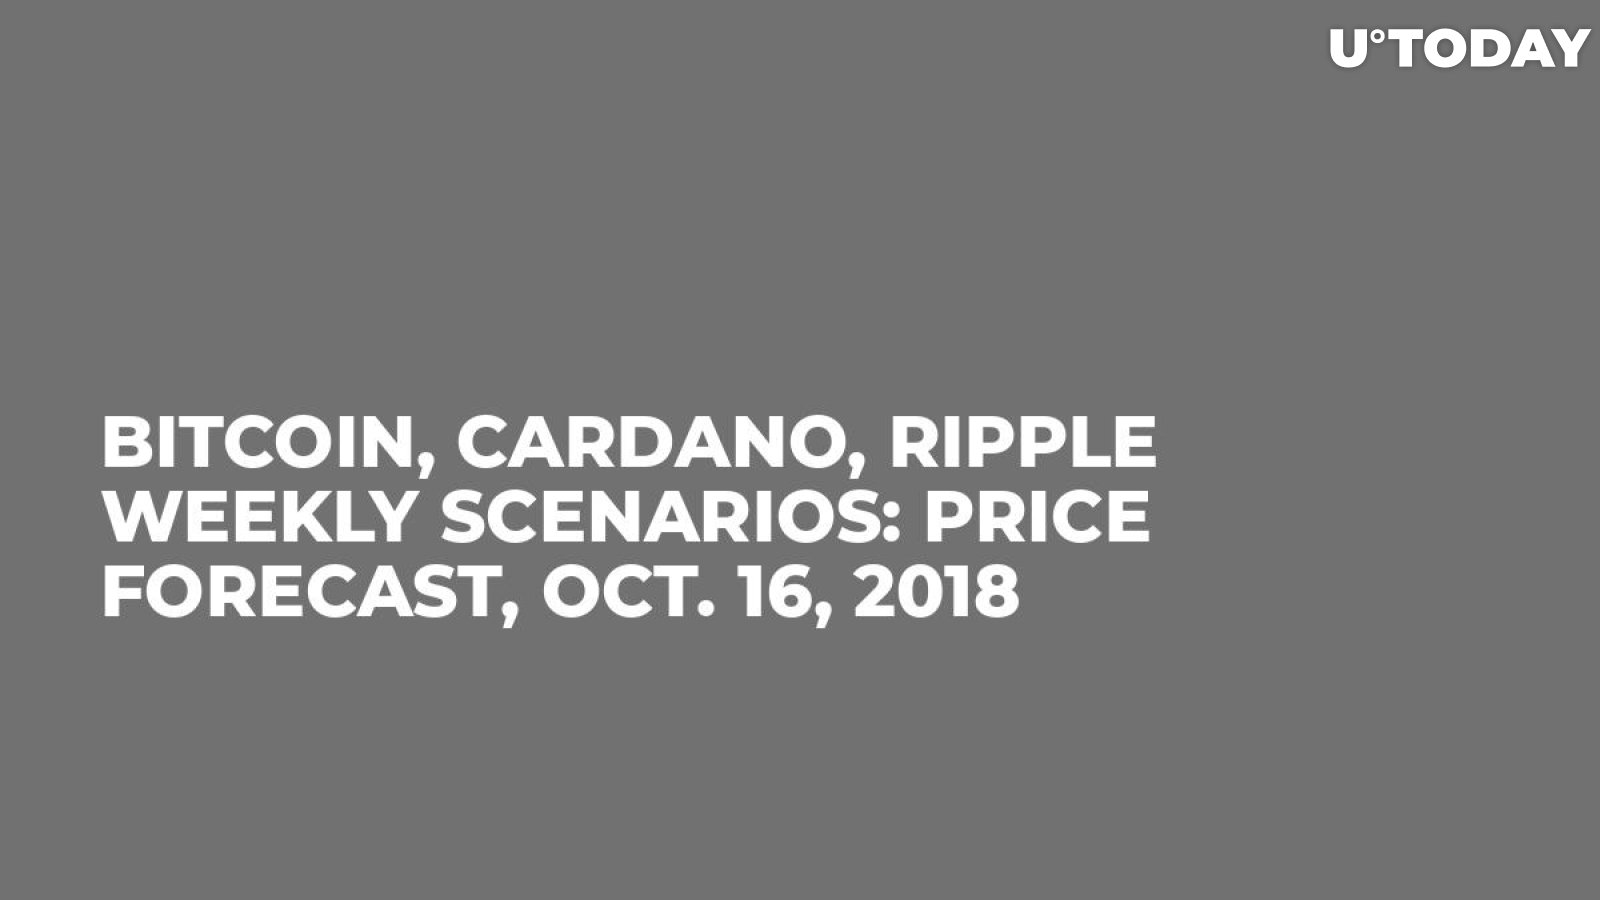 Bitcoin, Cardano, Ripple Weekly Scenarios: Price Forecast, Oct. 16, 2018